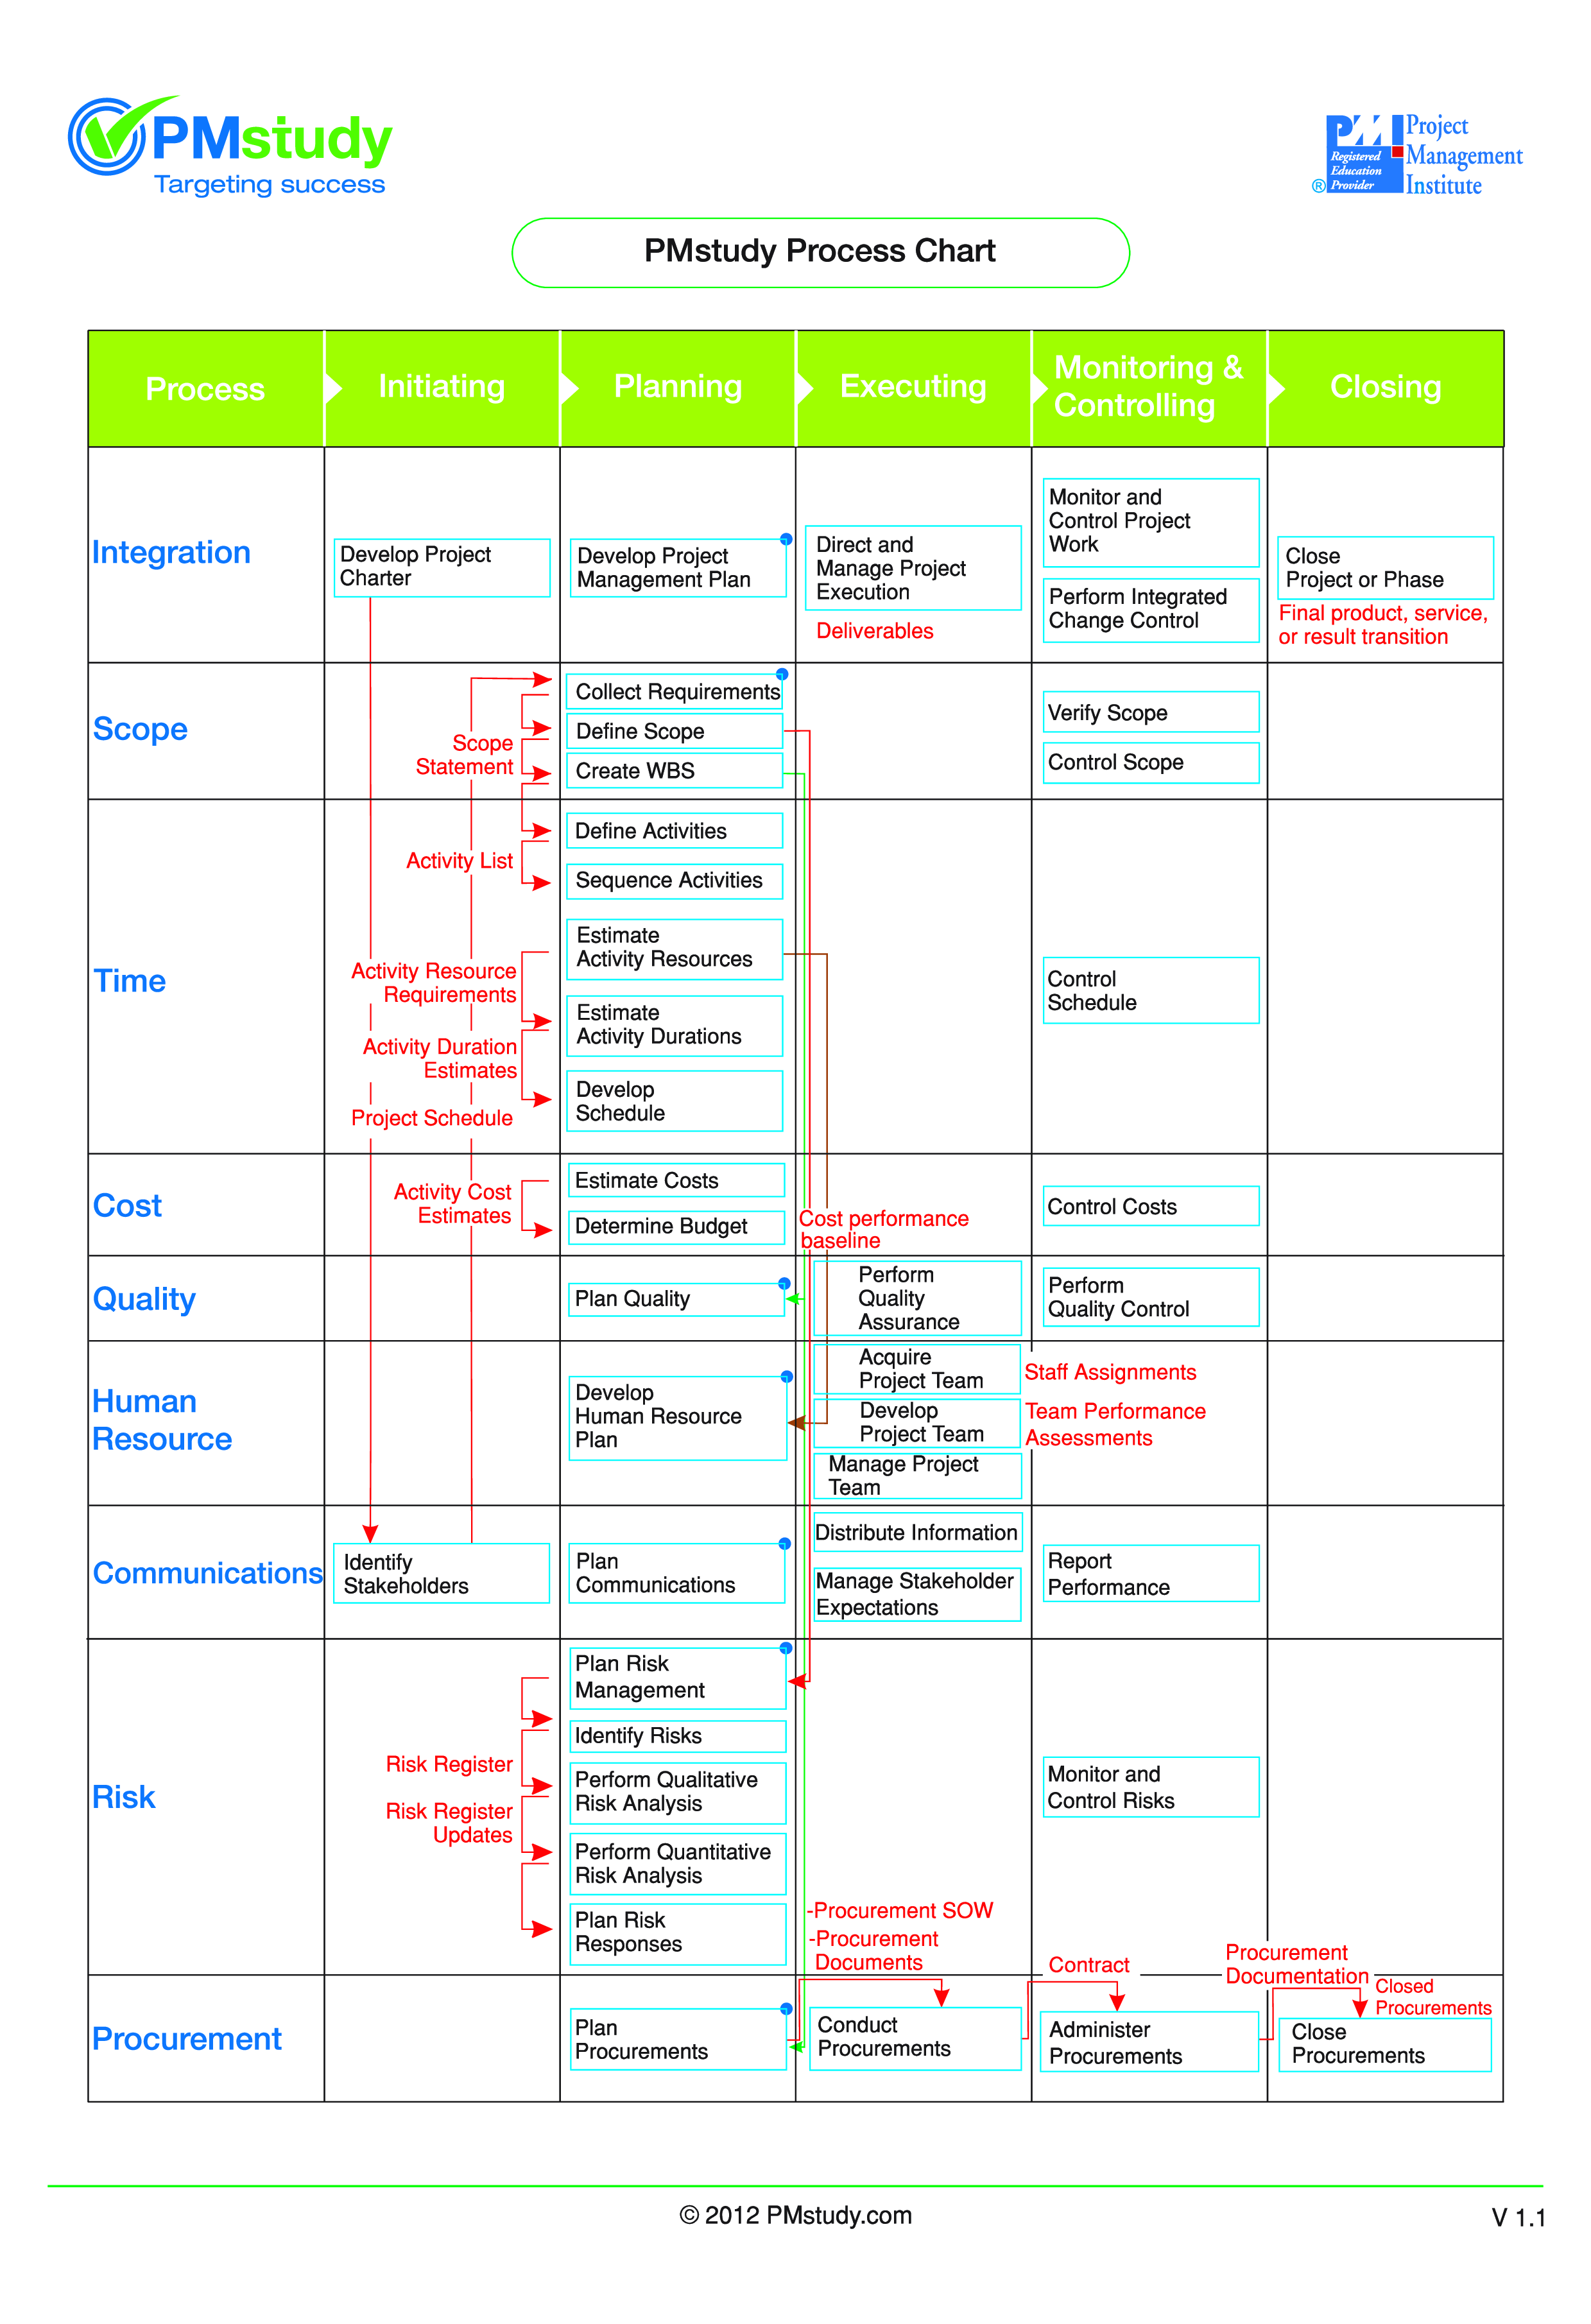 Process Chart sample | Templates at allbusinesstemplates.com